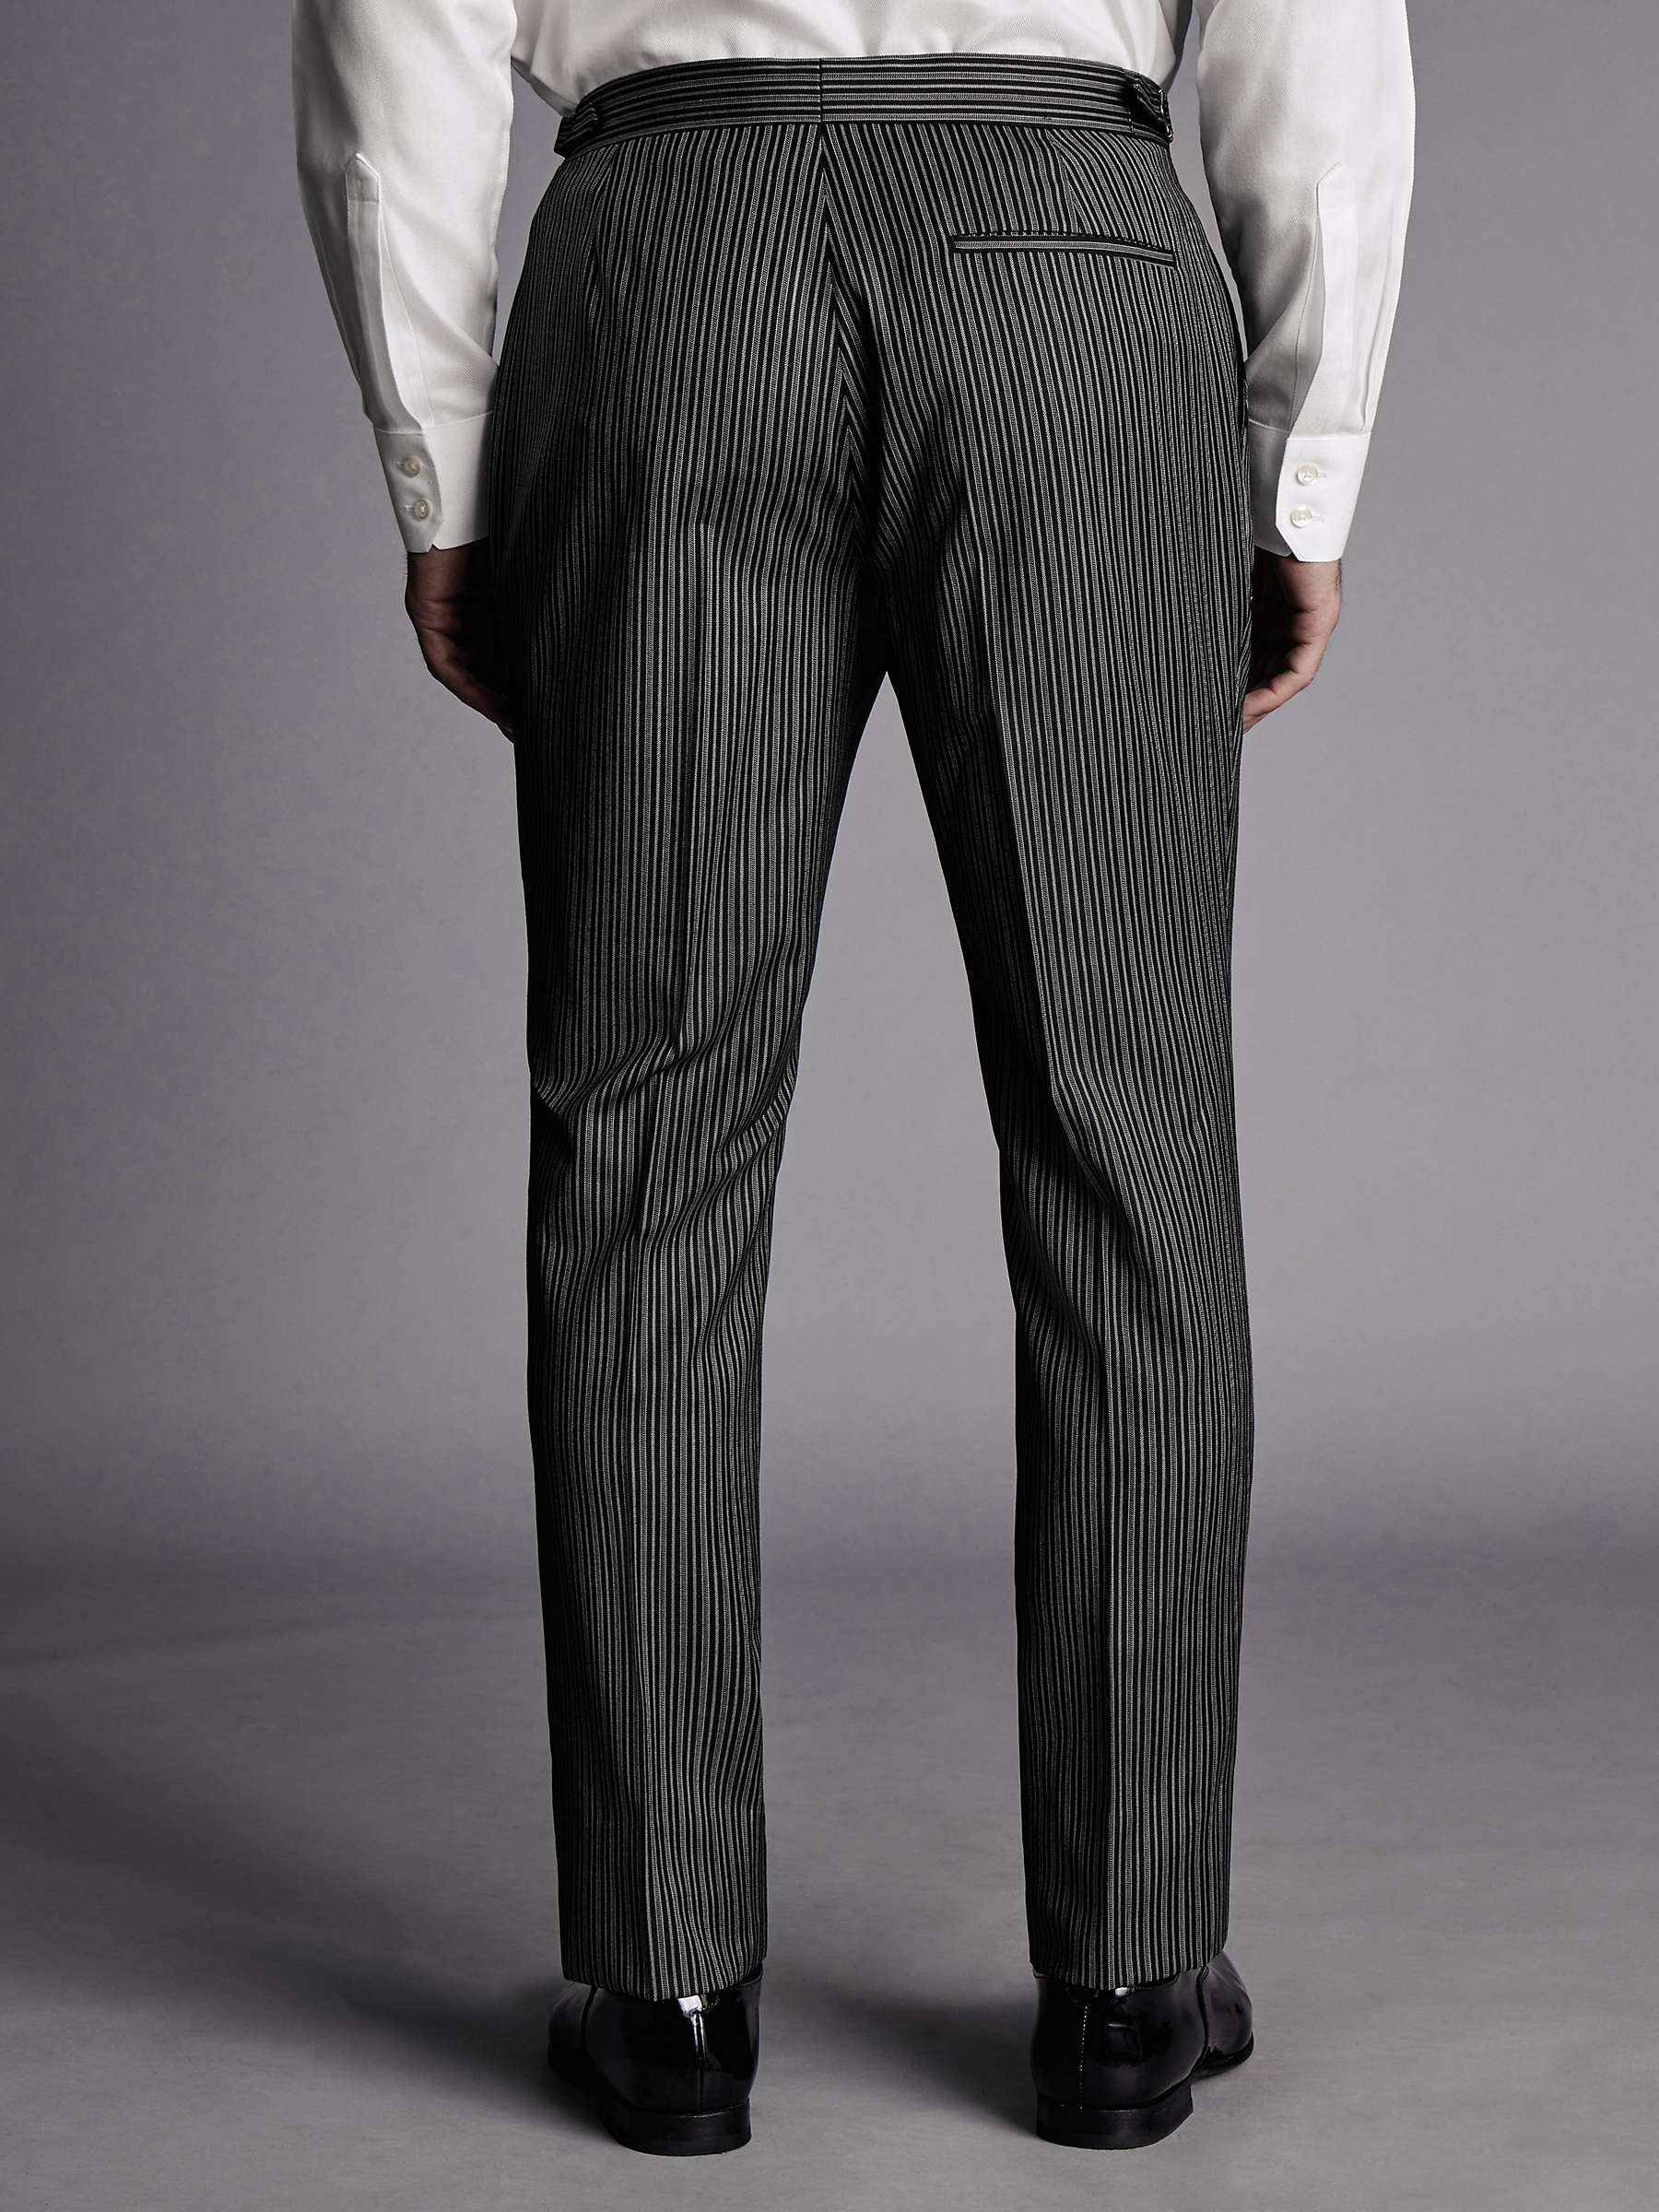 Buy Charles Tyrwhitt Morning Stripe Slim Fit Suit Trousers Online at johnlewis.com